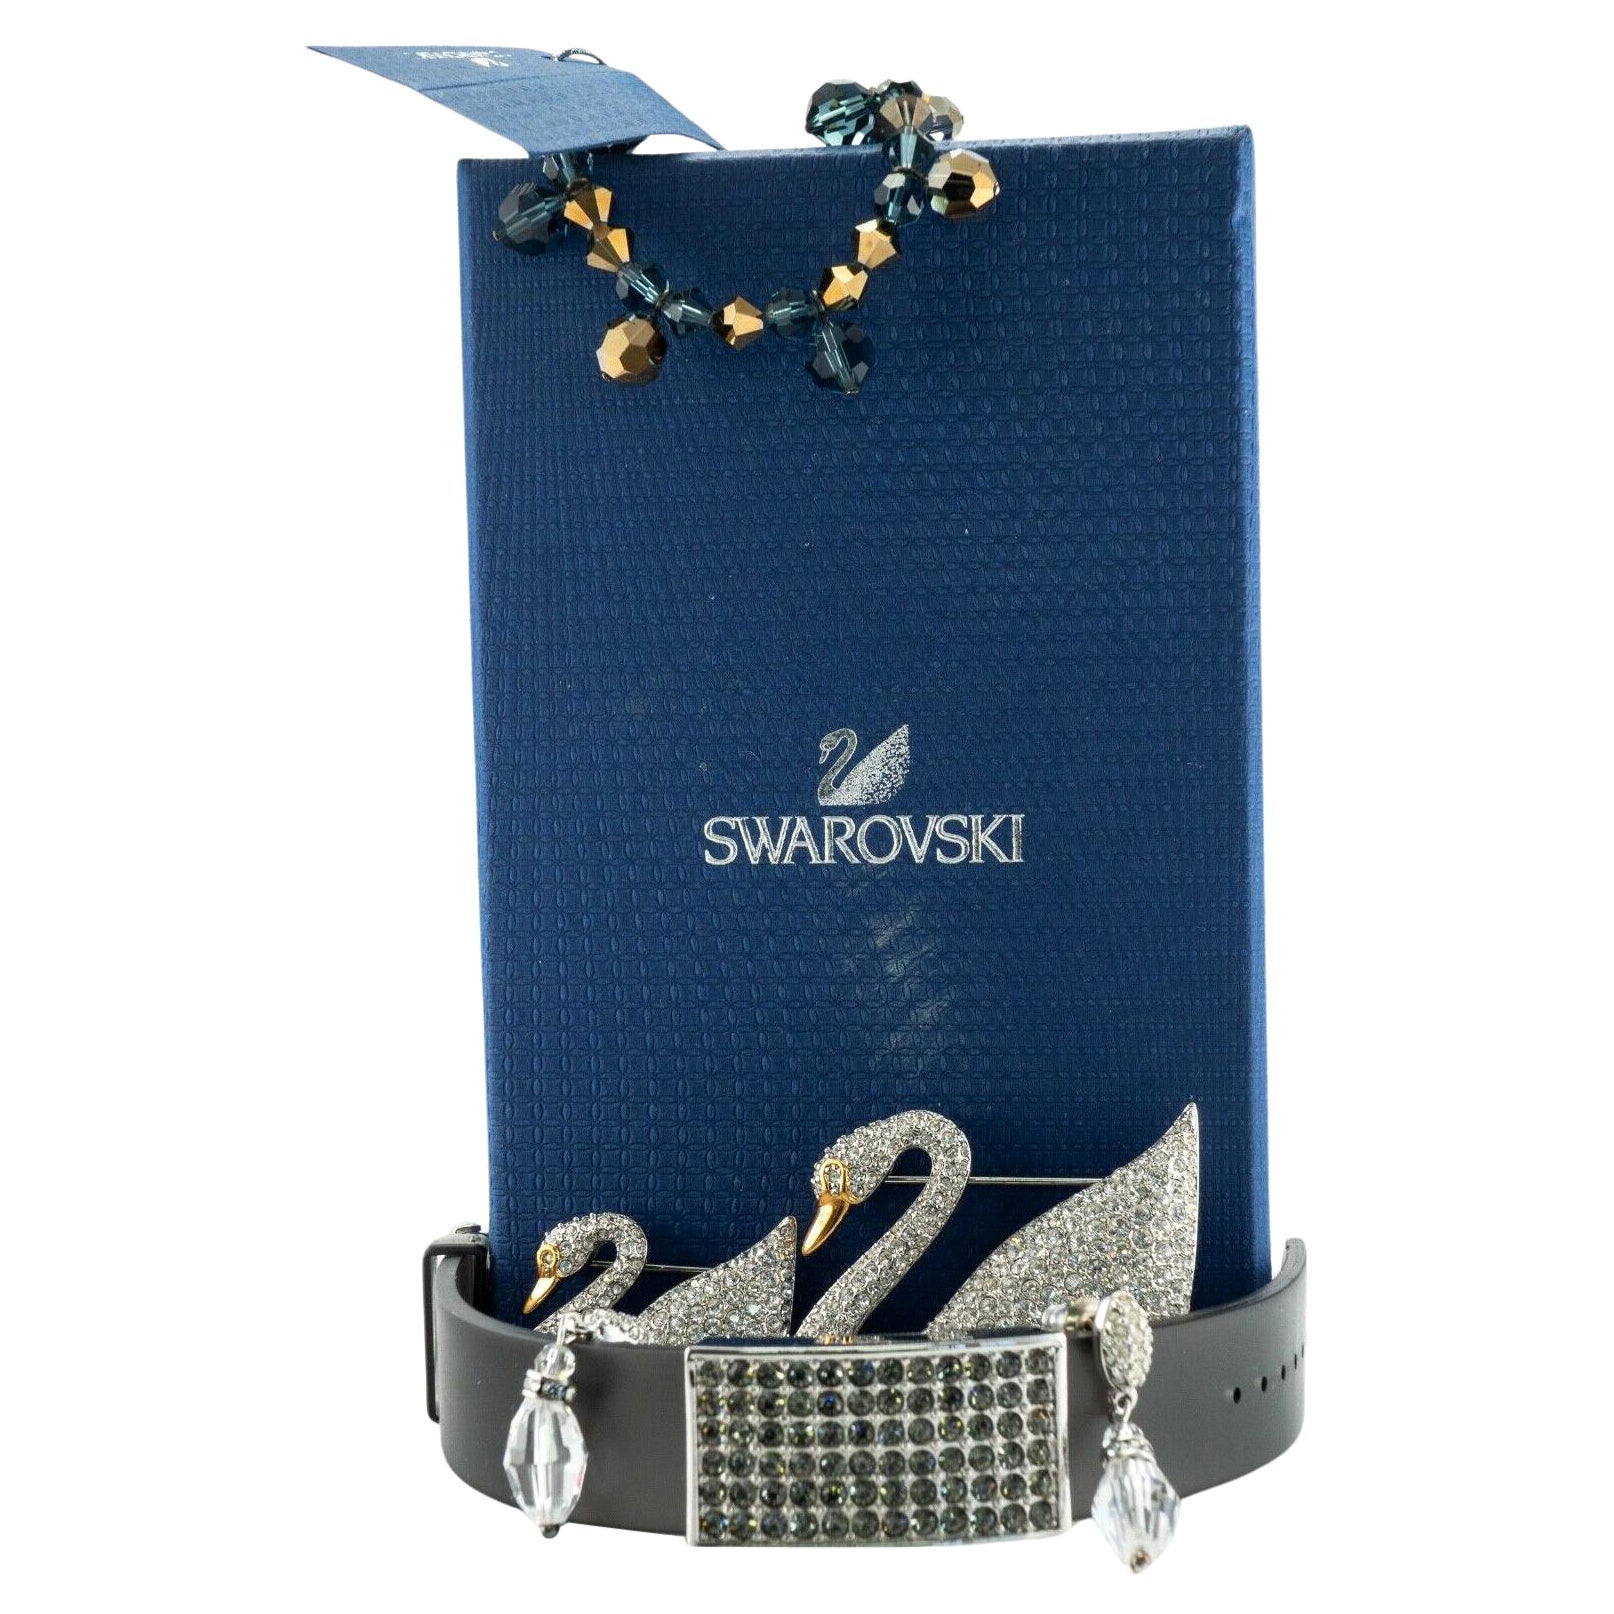 Swarovski Bracelets Swan Brooches Earrings Authentic Lot Box For Sale